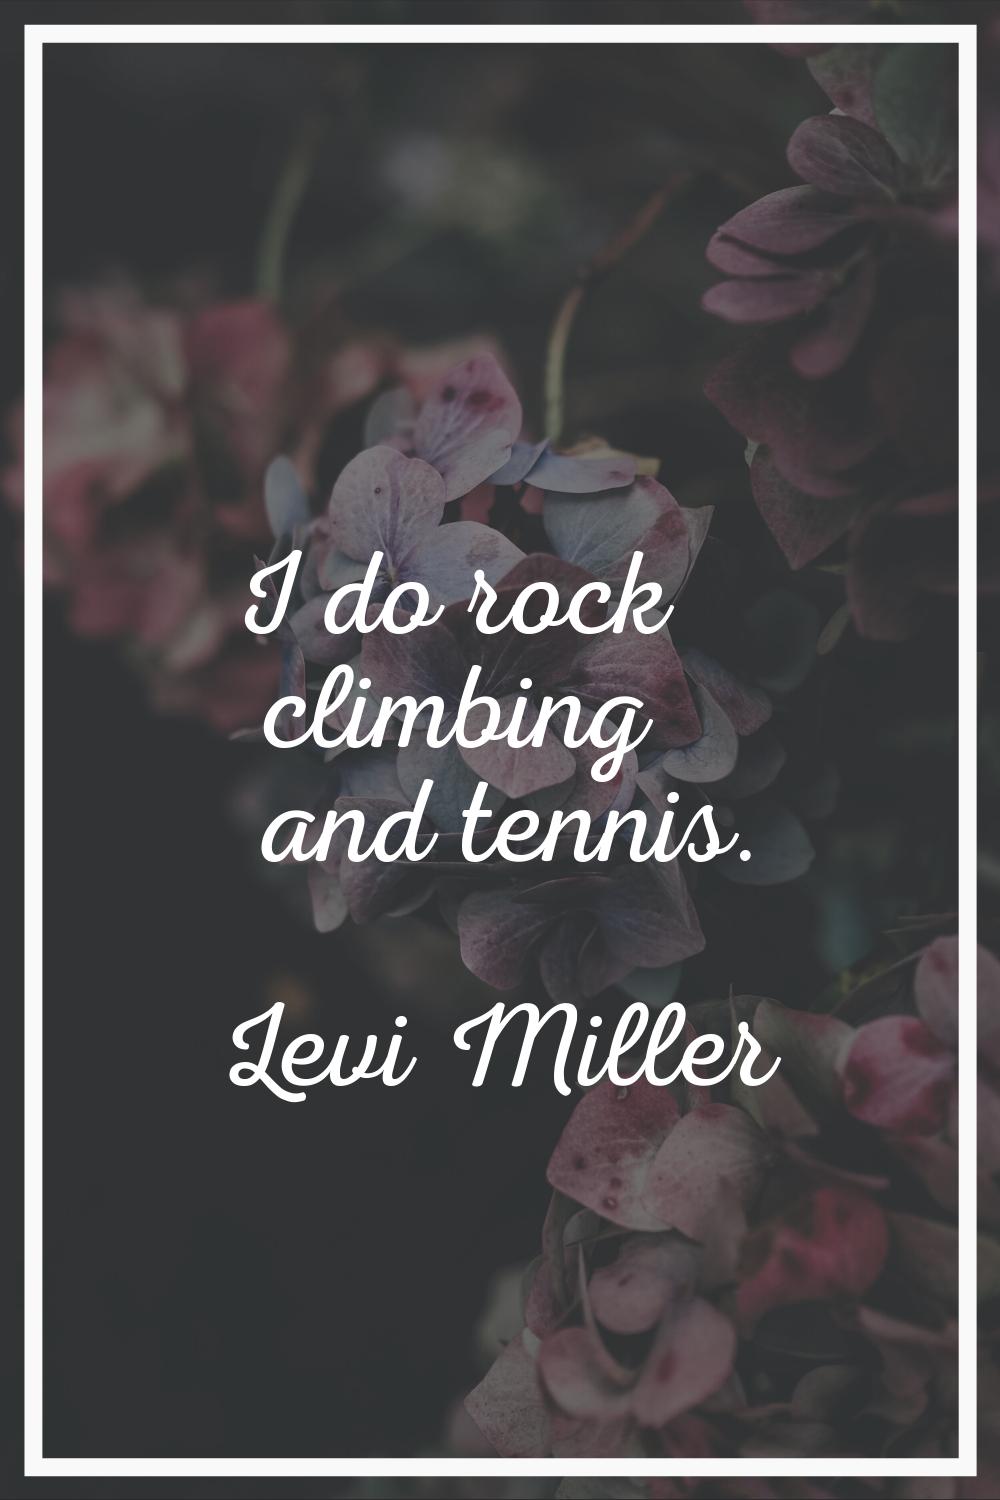 I do rock climbing and tennis.